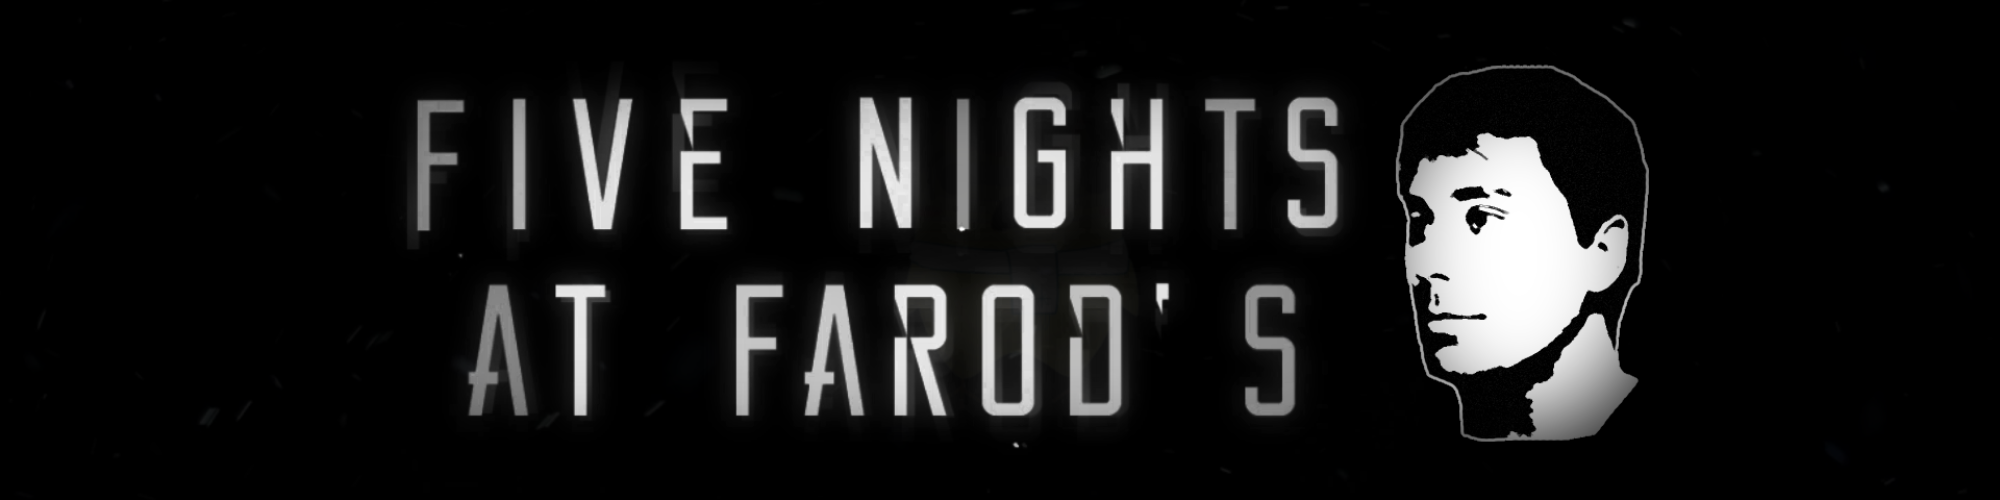 Five Nights at Farod's